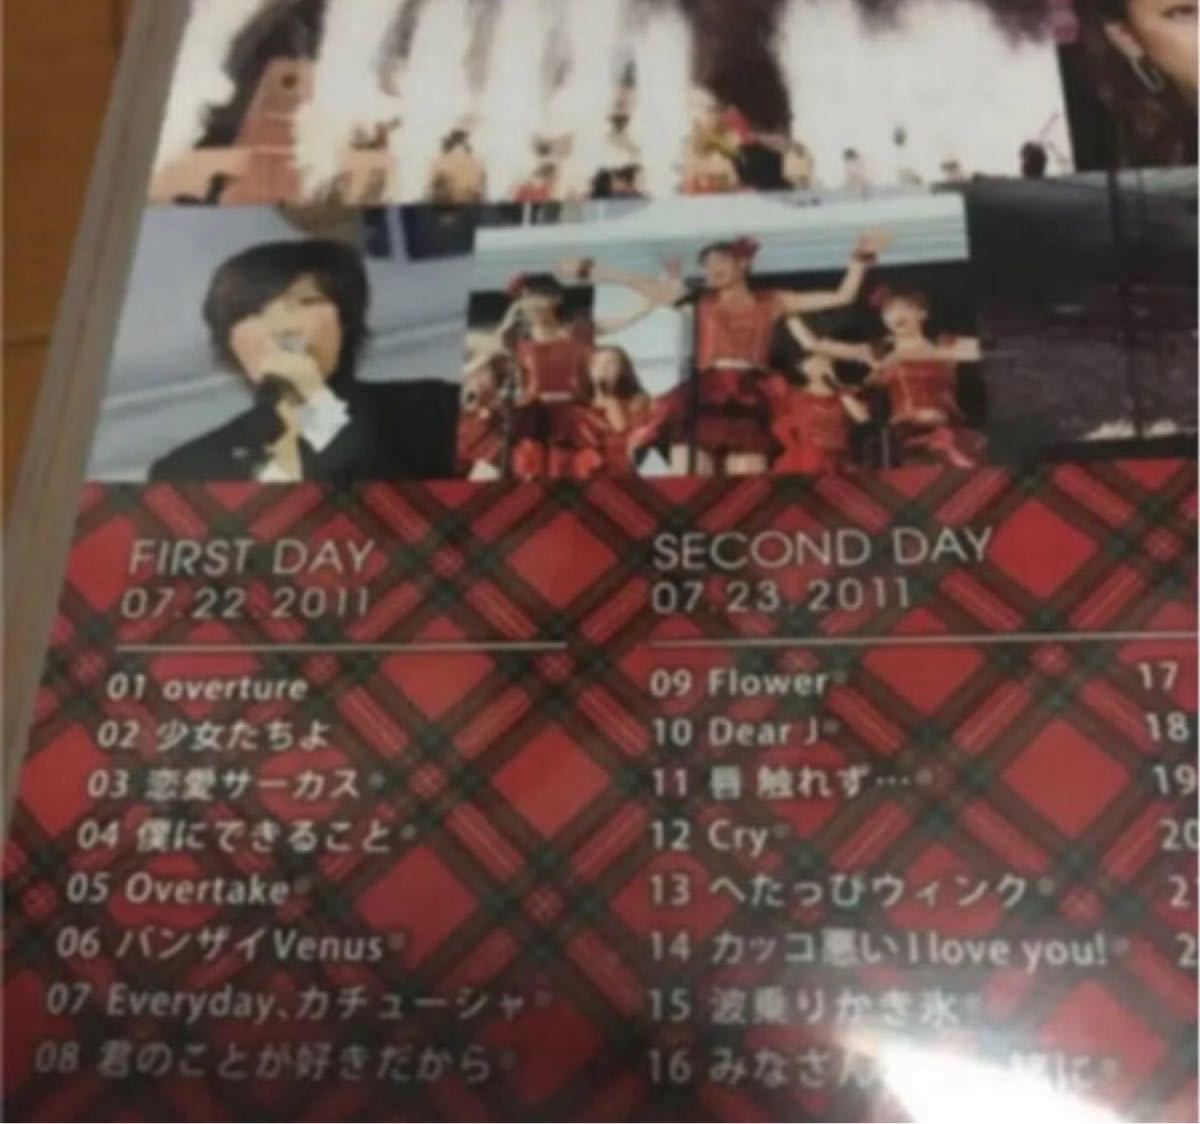 DVD 貴重　　AKB48 in 西武ドーム